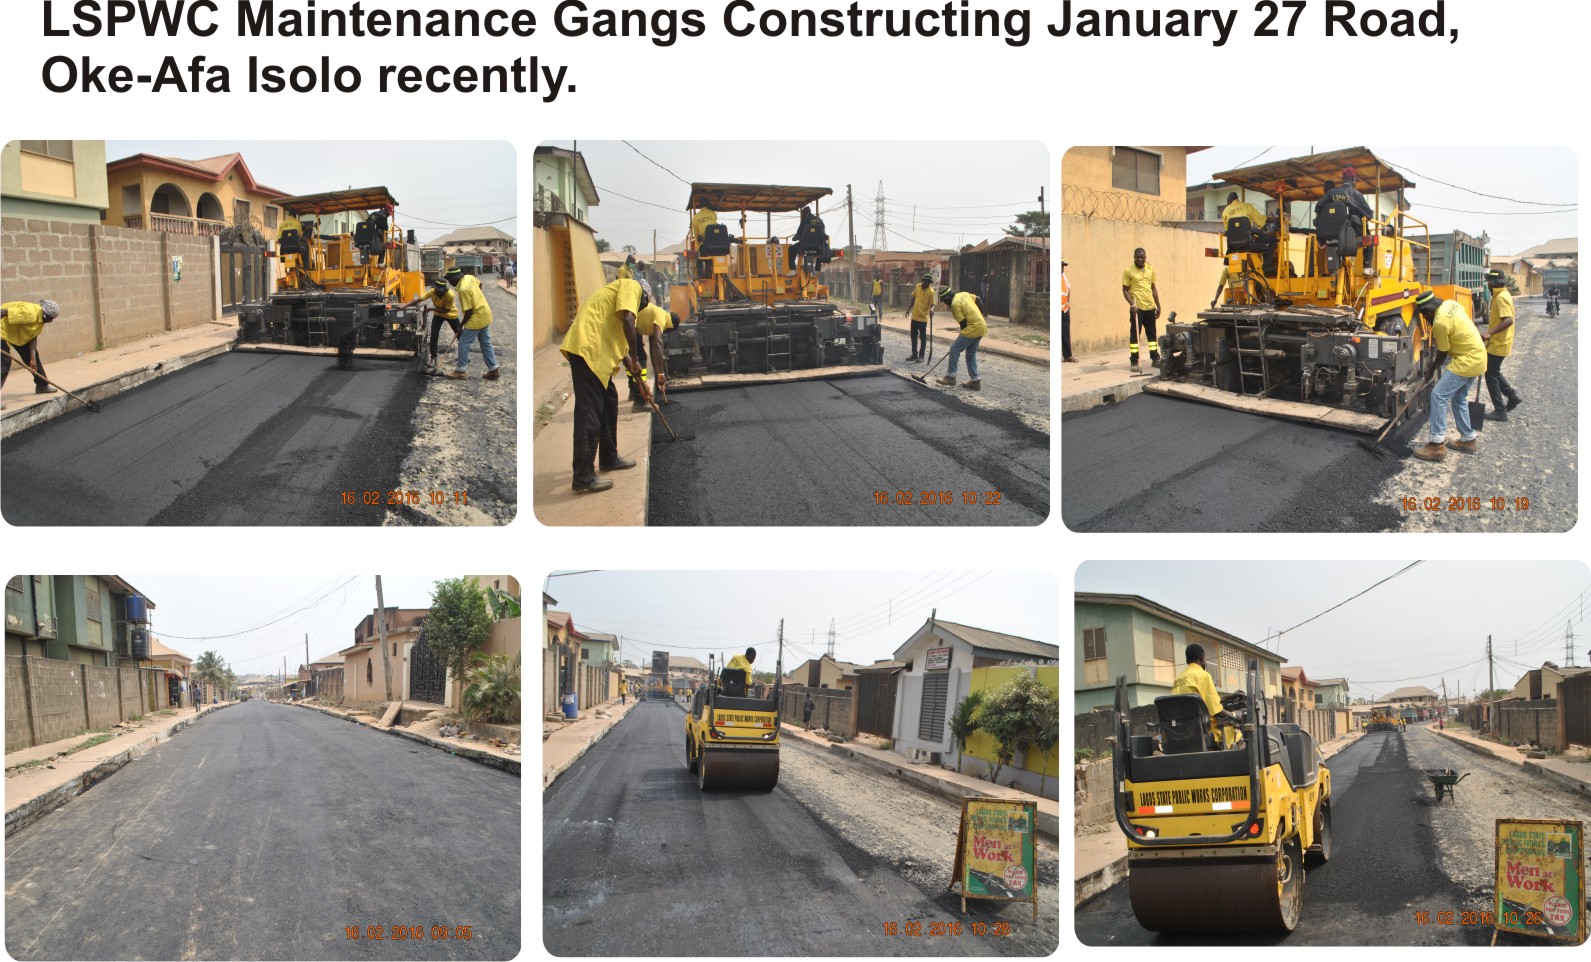 LSPWC Maintenance Gangs Constructing January 27 Road